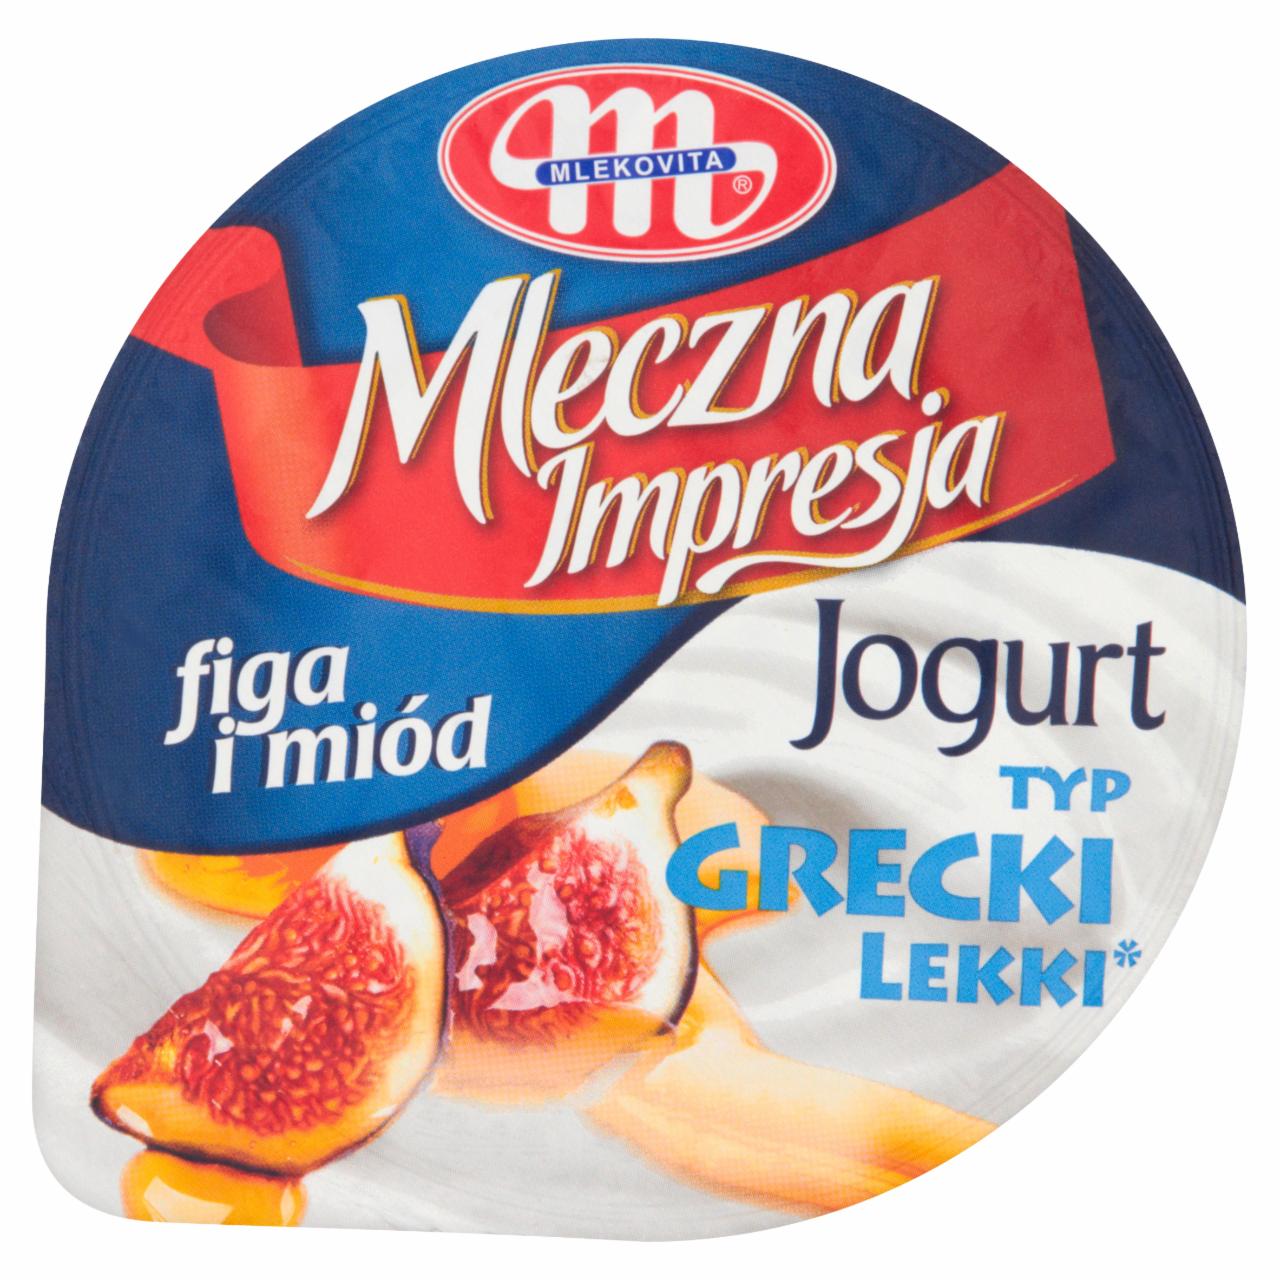 Zdjęcia - Mlekovita Mleczna Impresja Jogurt typ grecki lekki figa i miód 150 g